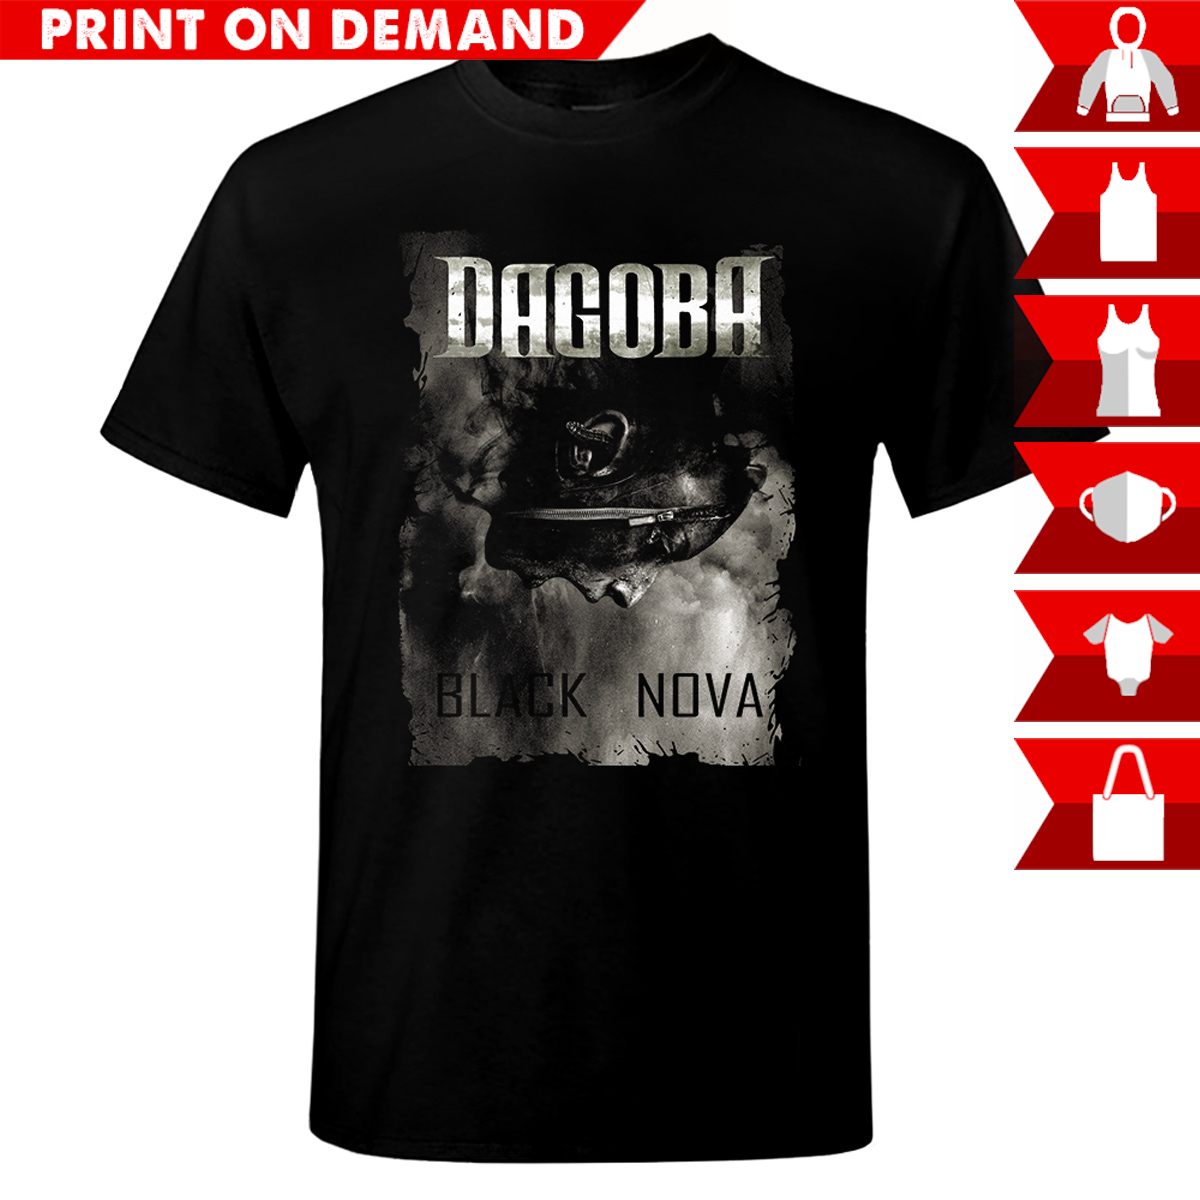 Dagoba - Black Nova - Print on demand